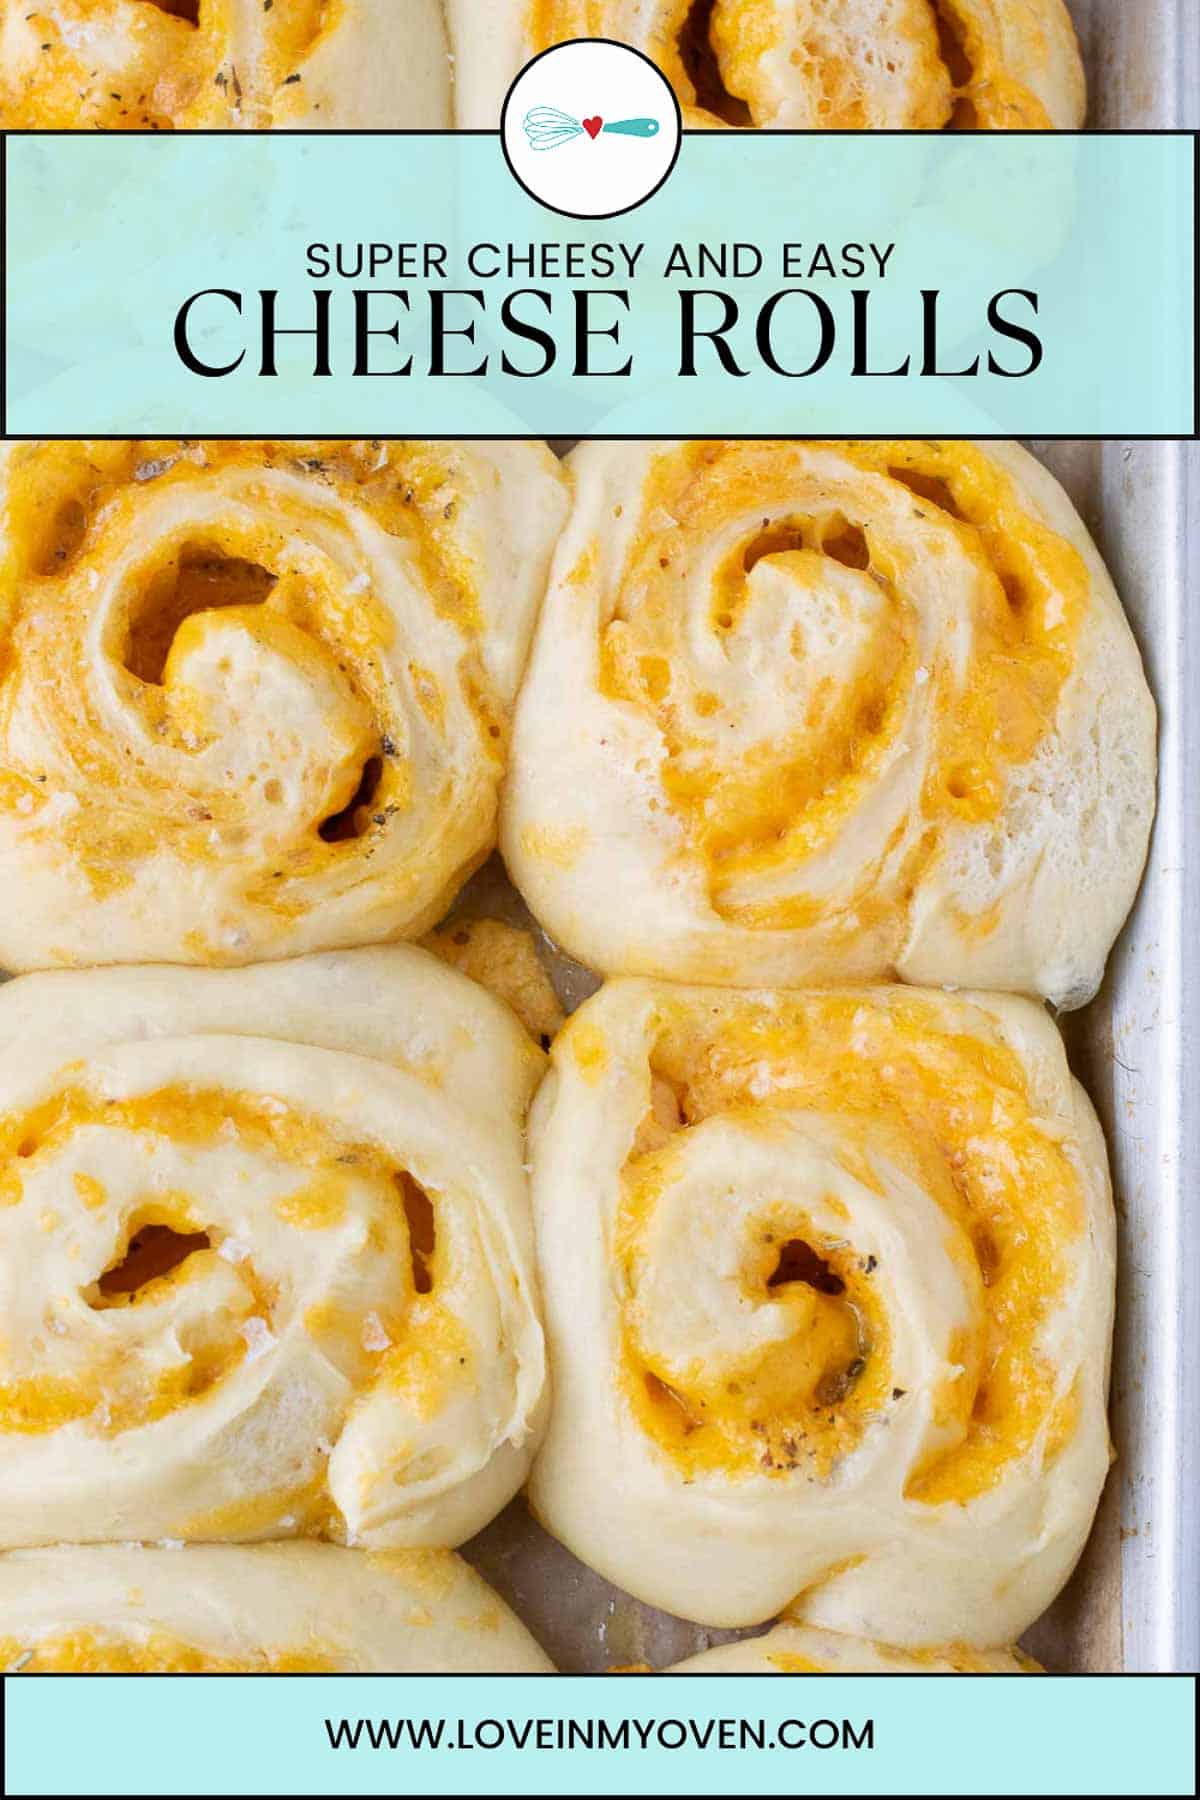 Cheese Rolls